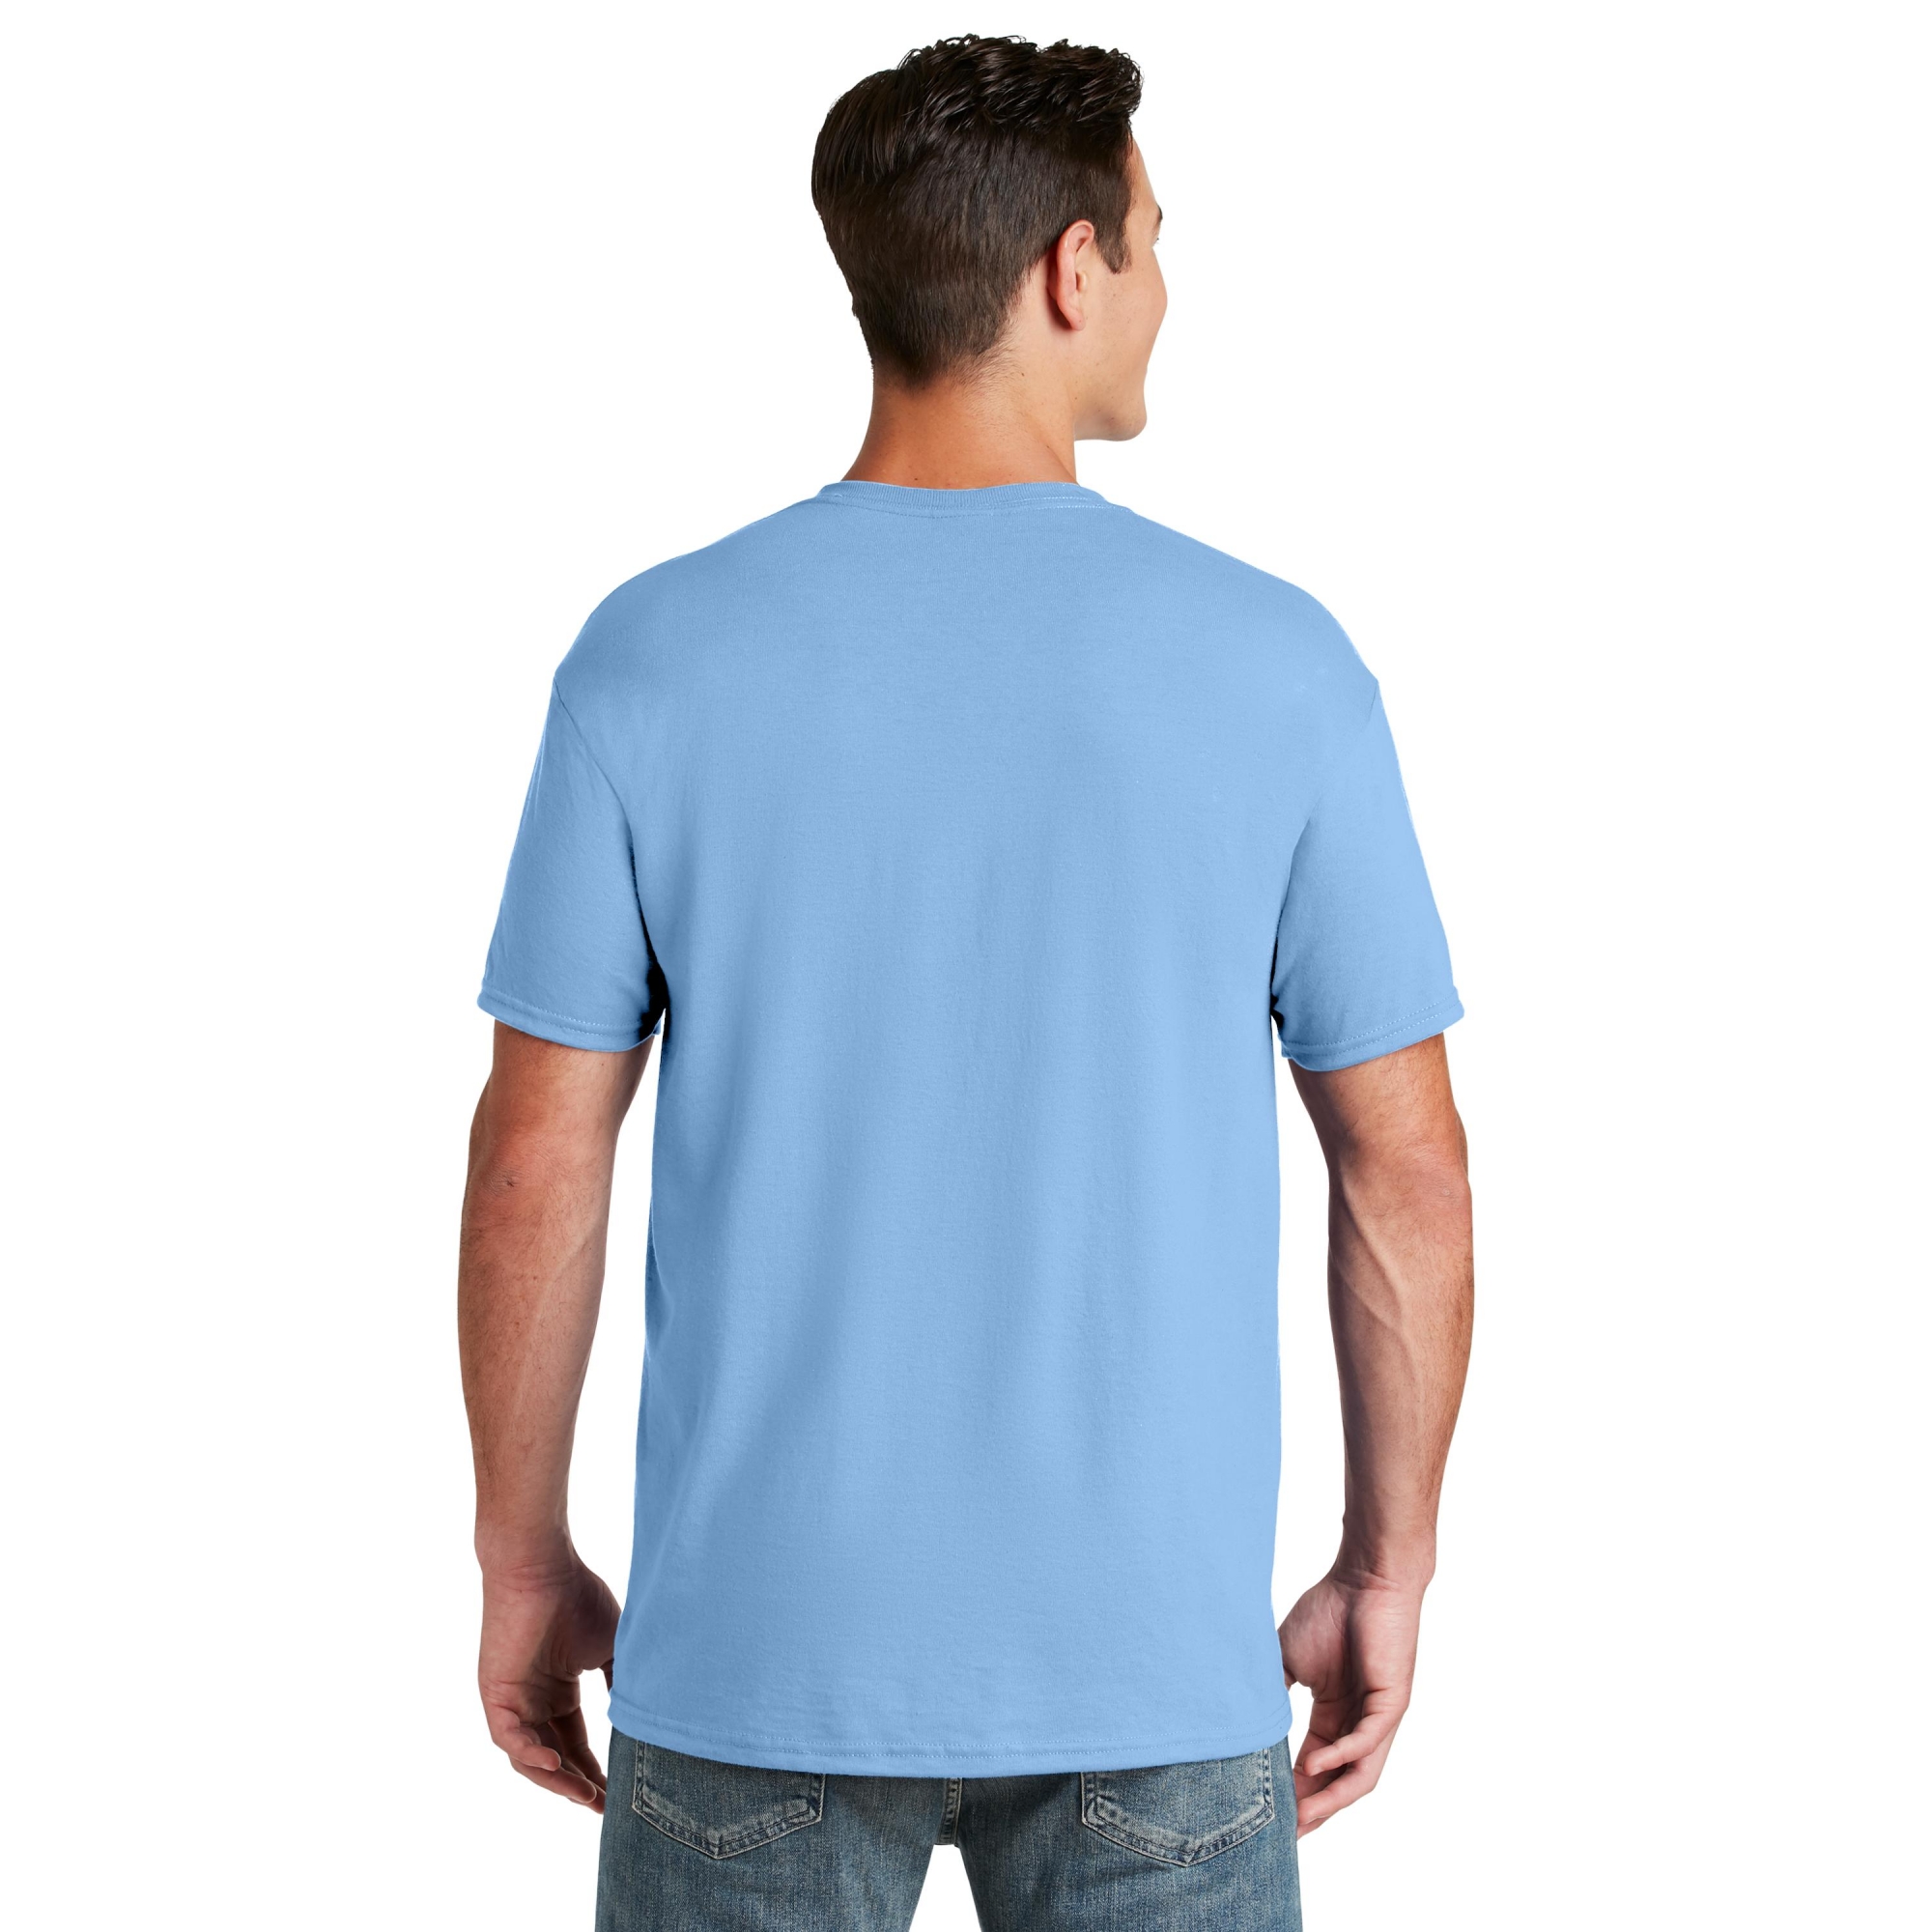 Jerzees 29M Dri-Power Active 50/50 Cotton/Poly T-Shirt - Light Blue ...